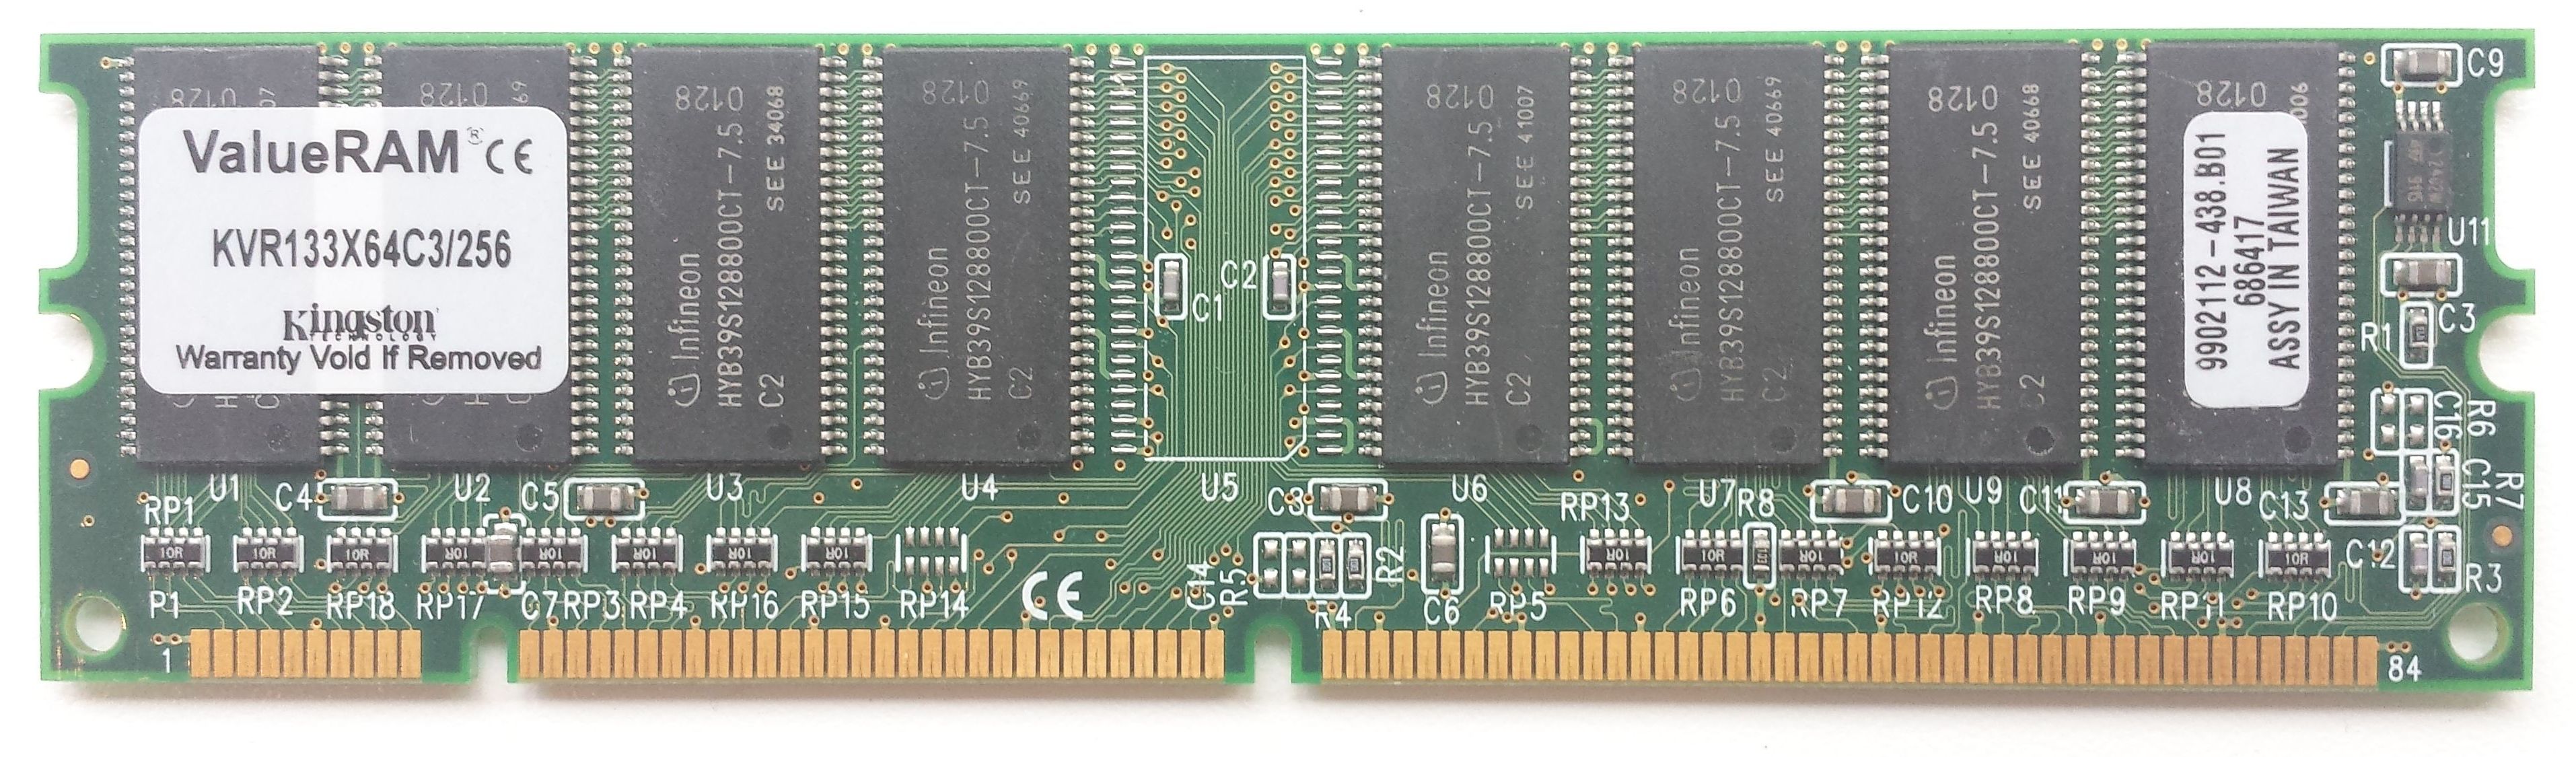 SDRAM 256MB 133Mhz / Kingston KVR133X64C3/256 (dual side)